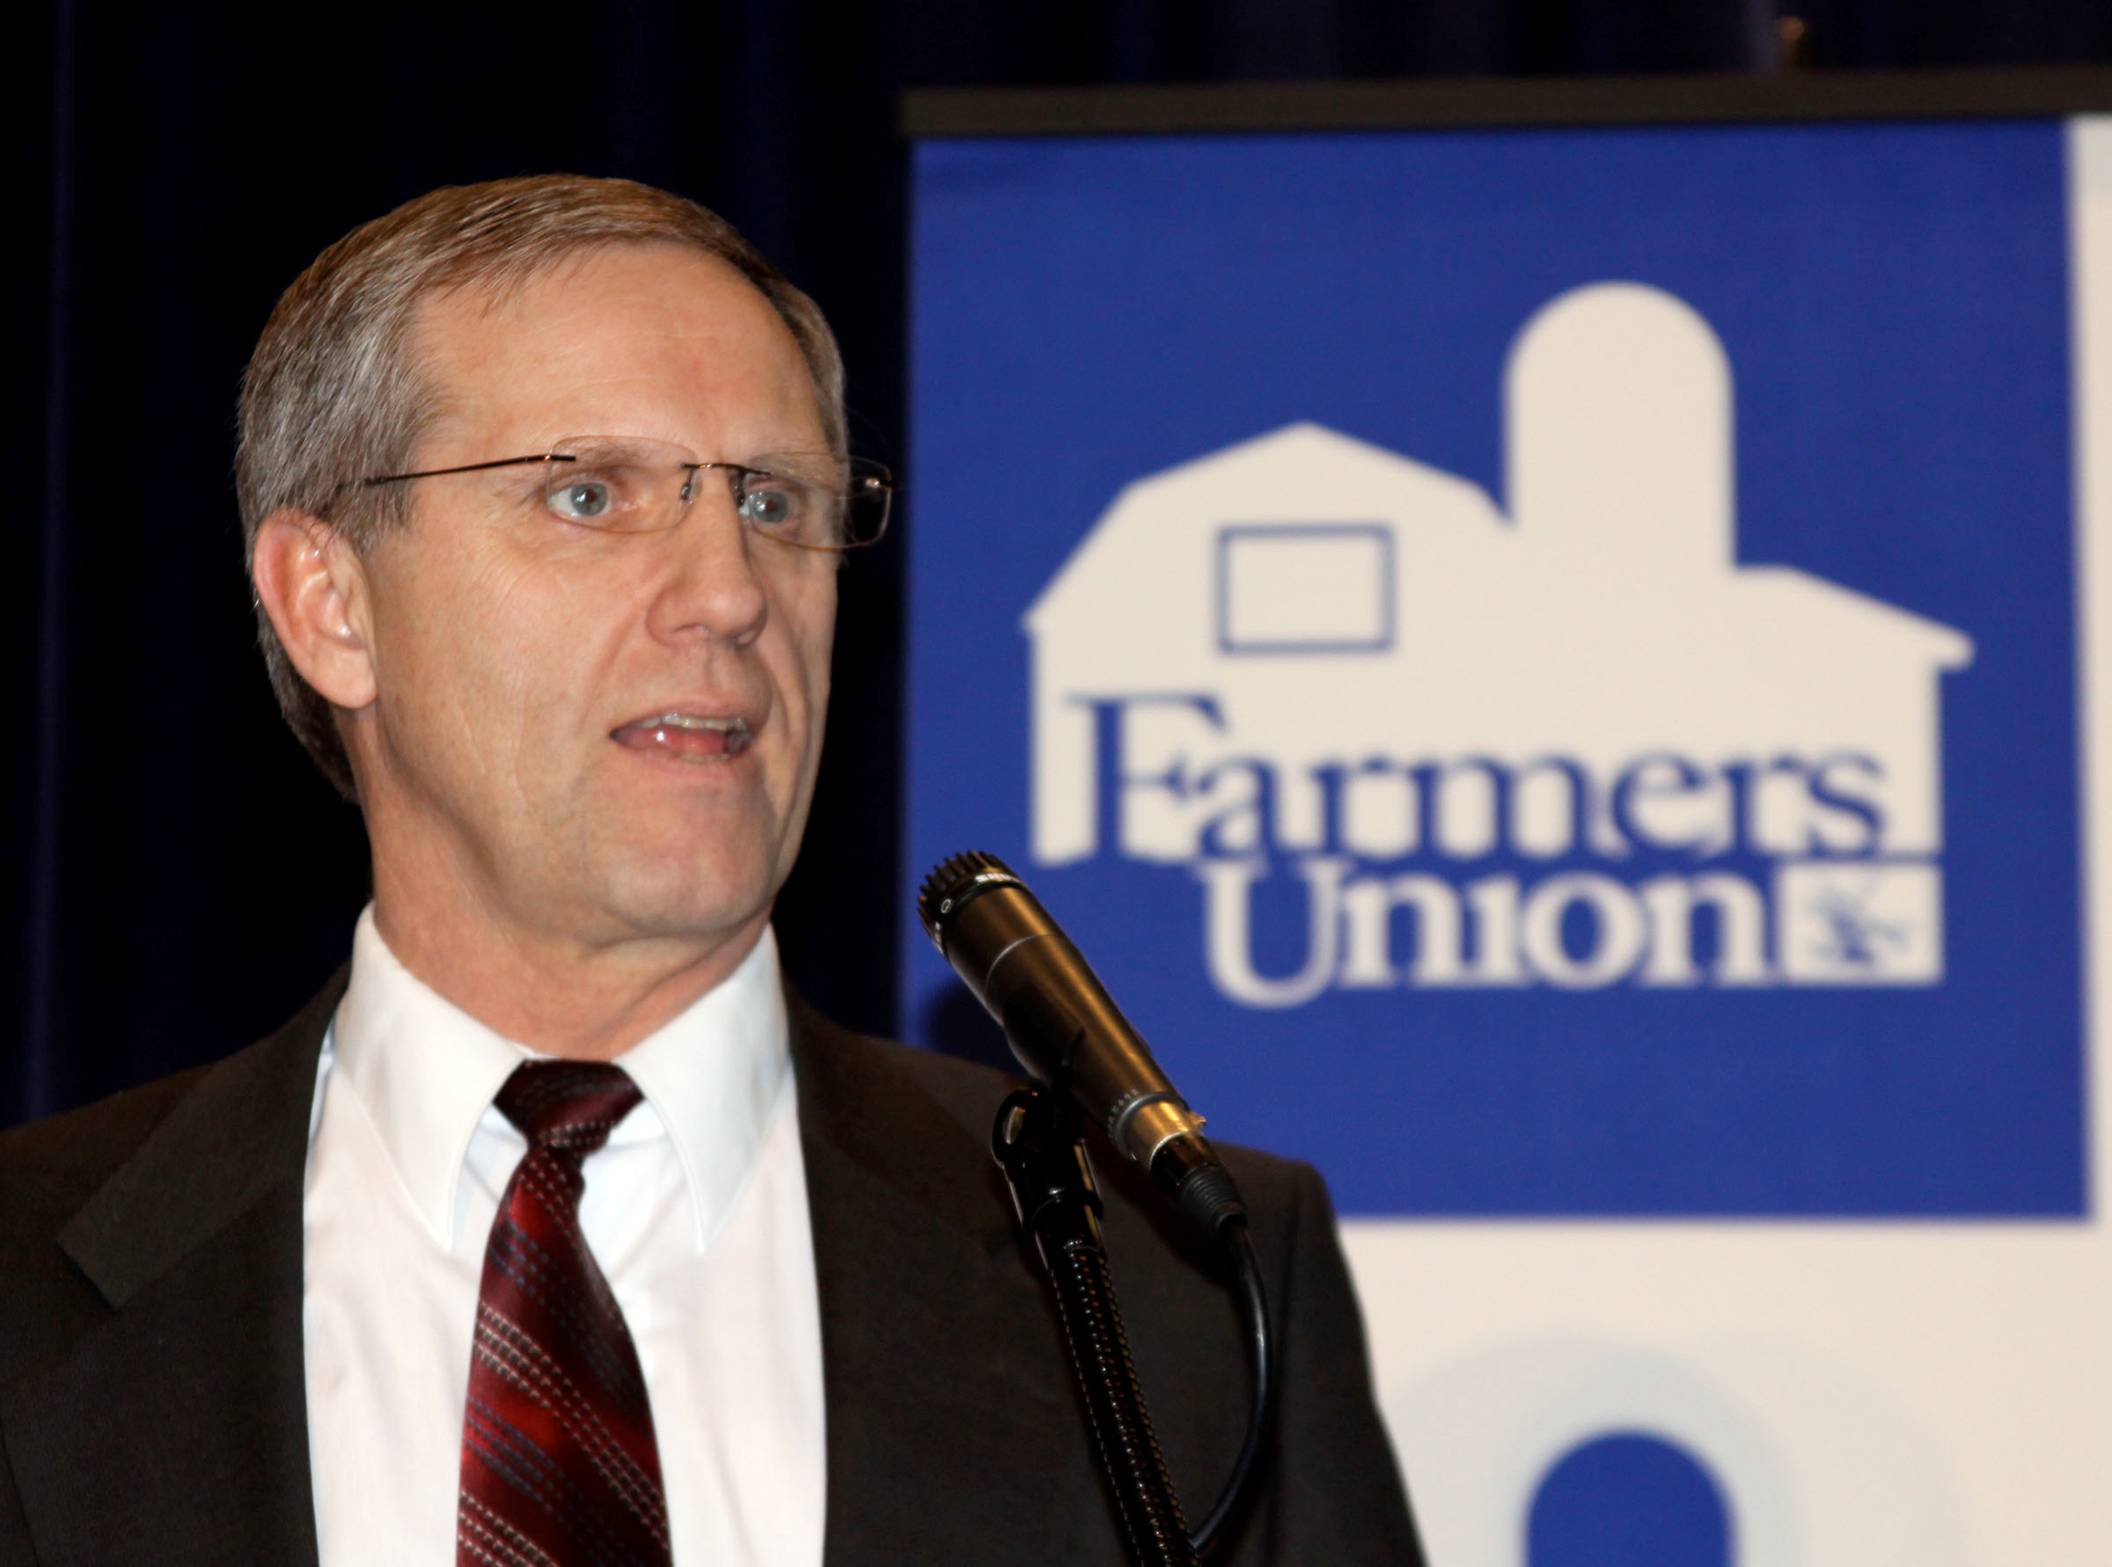 National Farmers Union Calls On President Obama to Act On GIPSA Rule